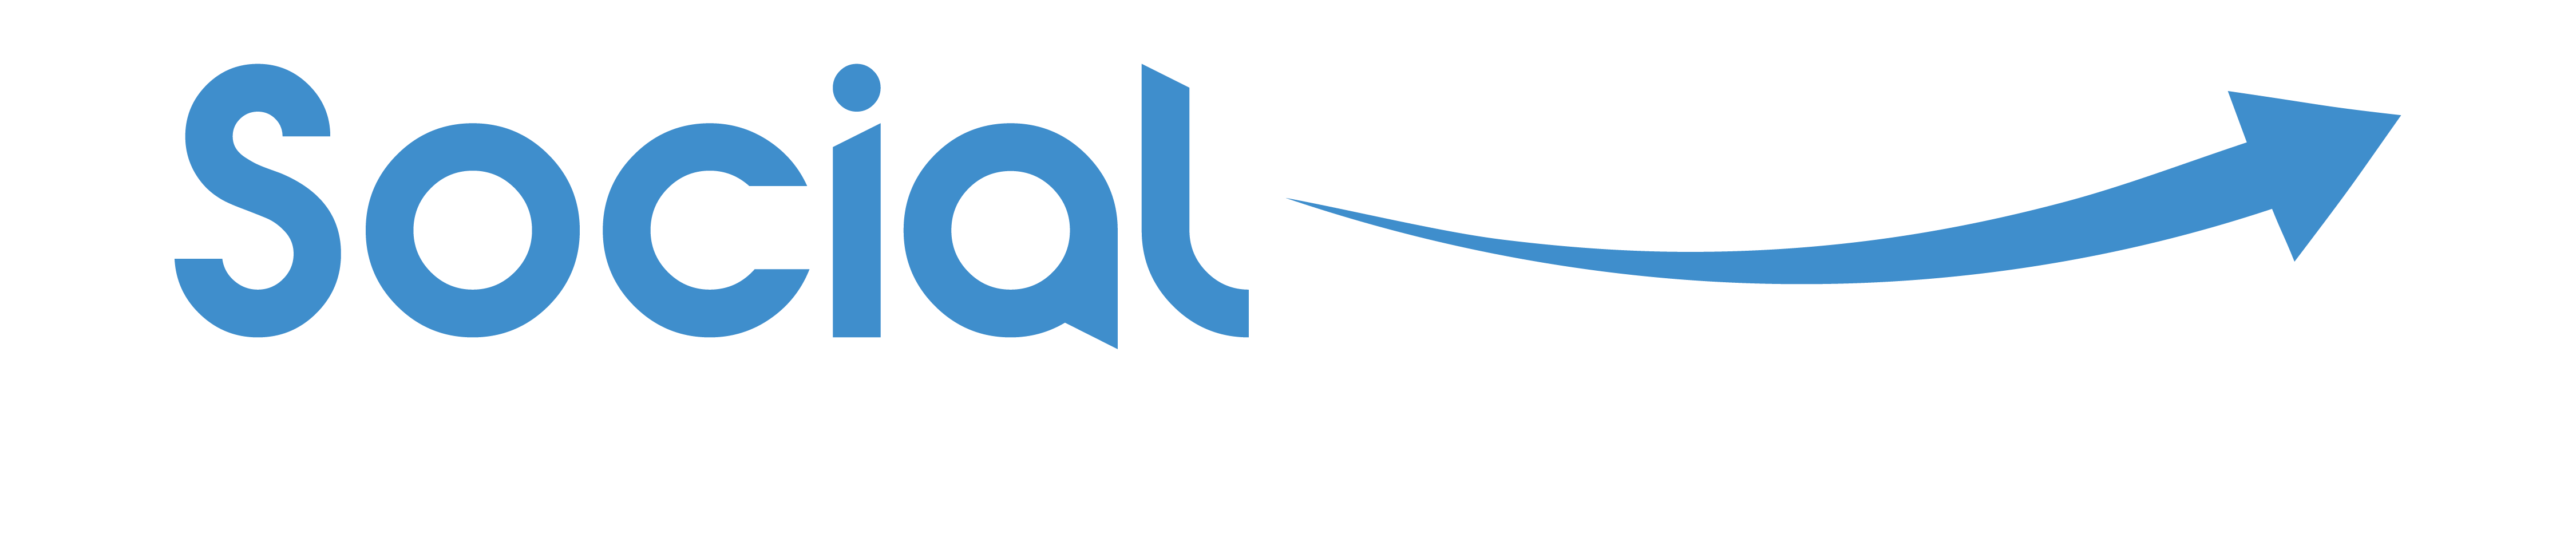 Socialboost Logo im Footer Blau Weiß